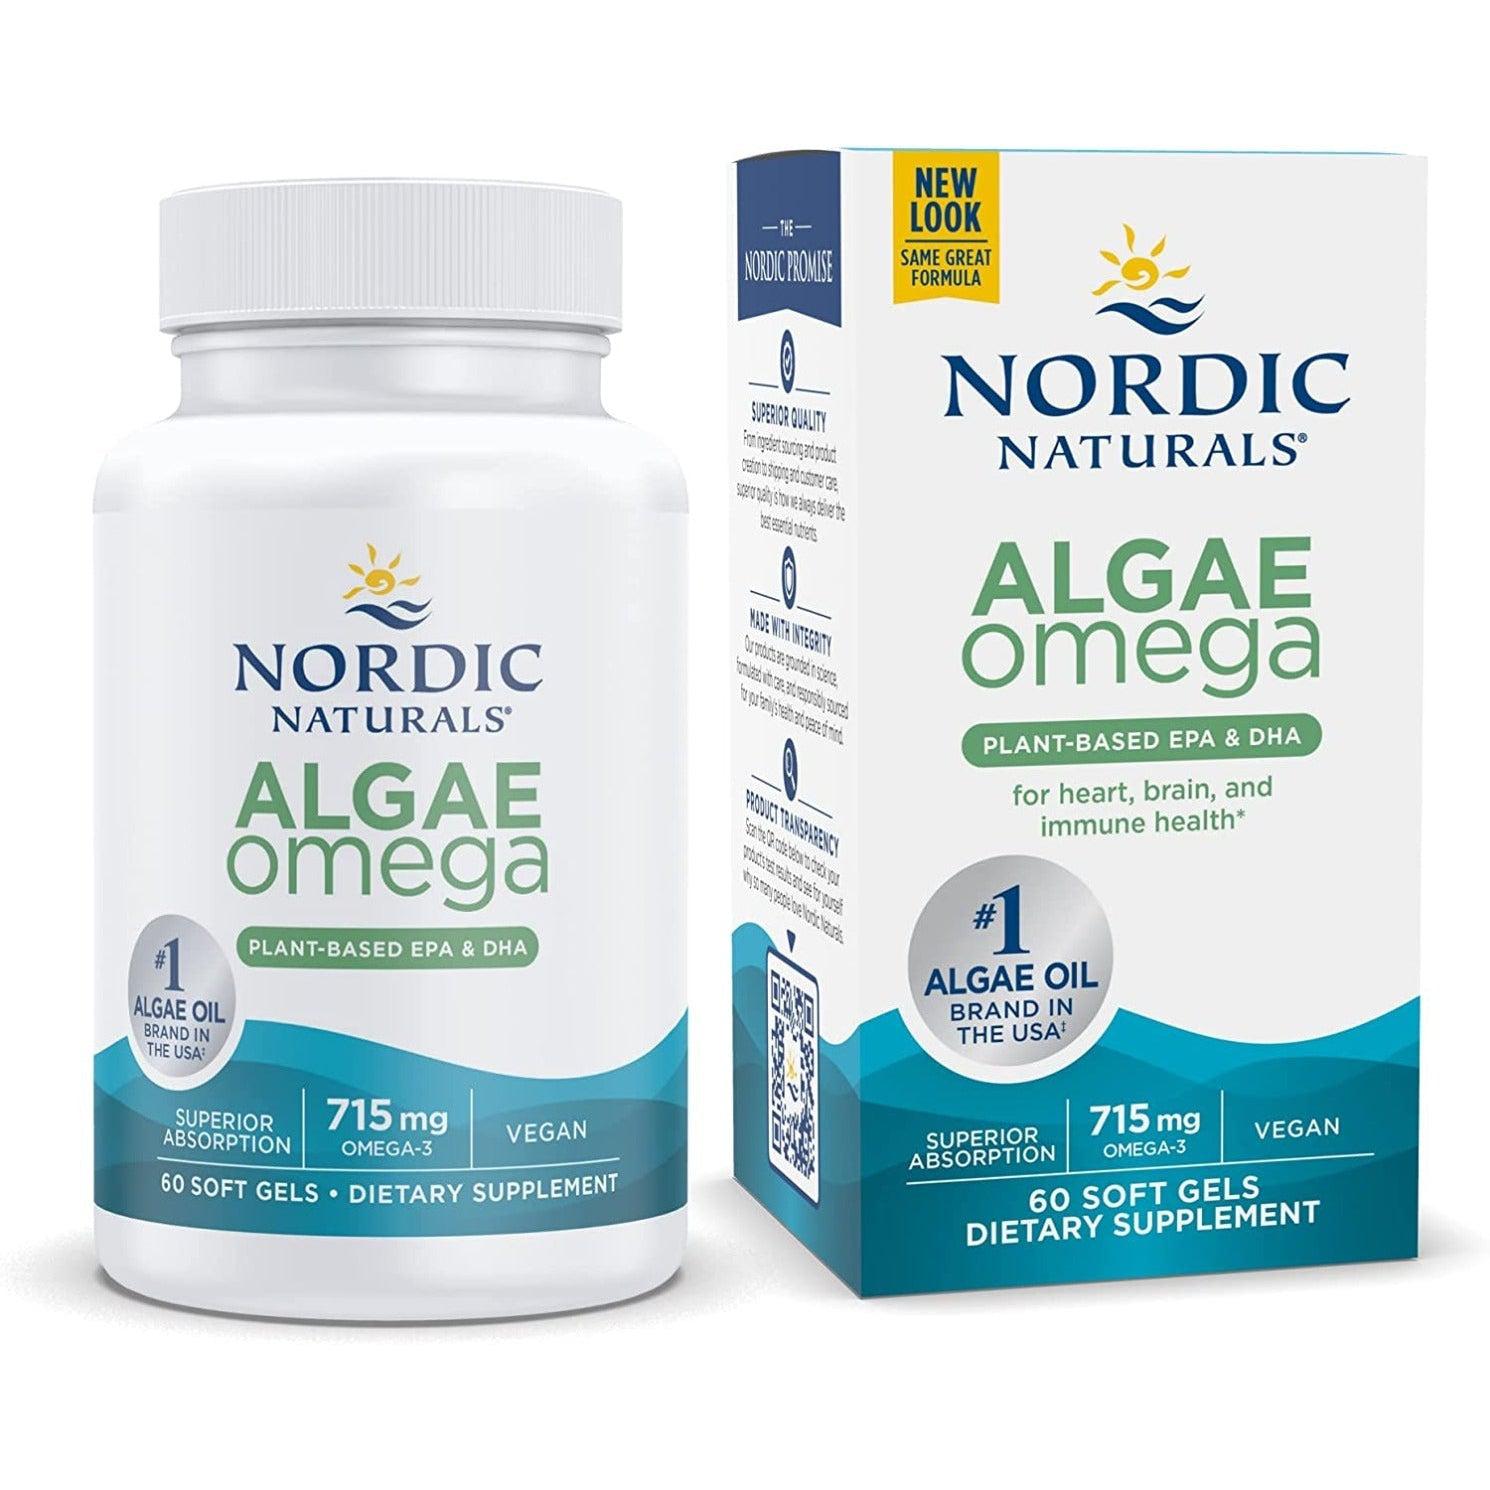 Nordic Naturals Algae Omega Plant Based EPA & DHA 715mg Omega-3 60 Softgels